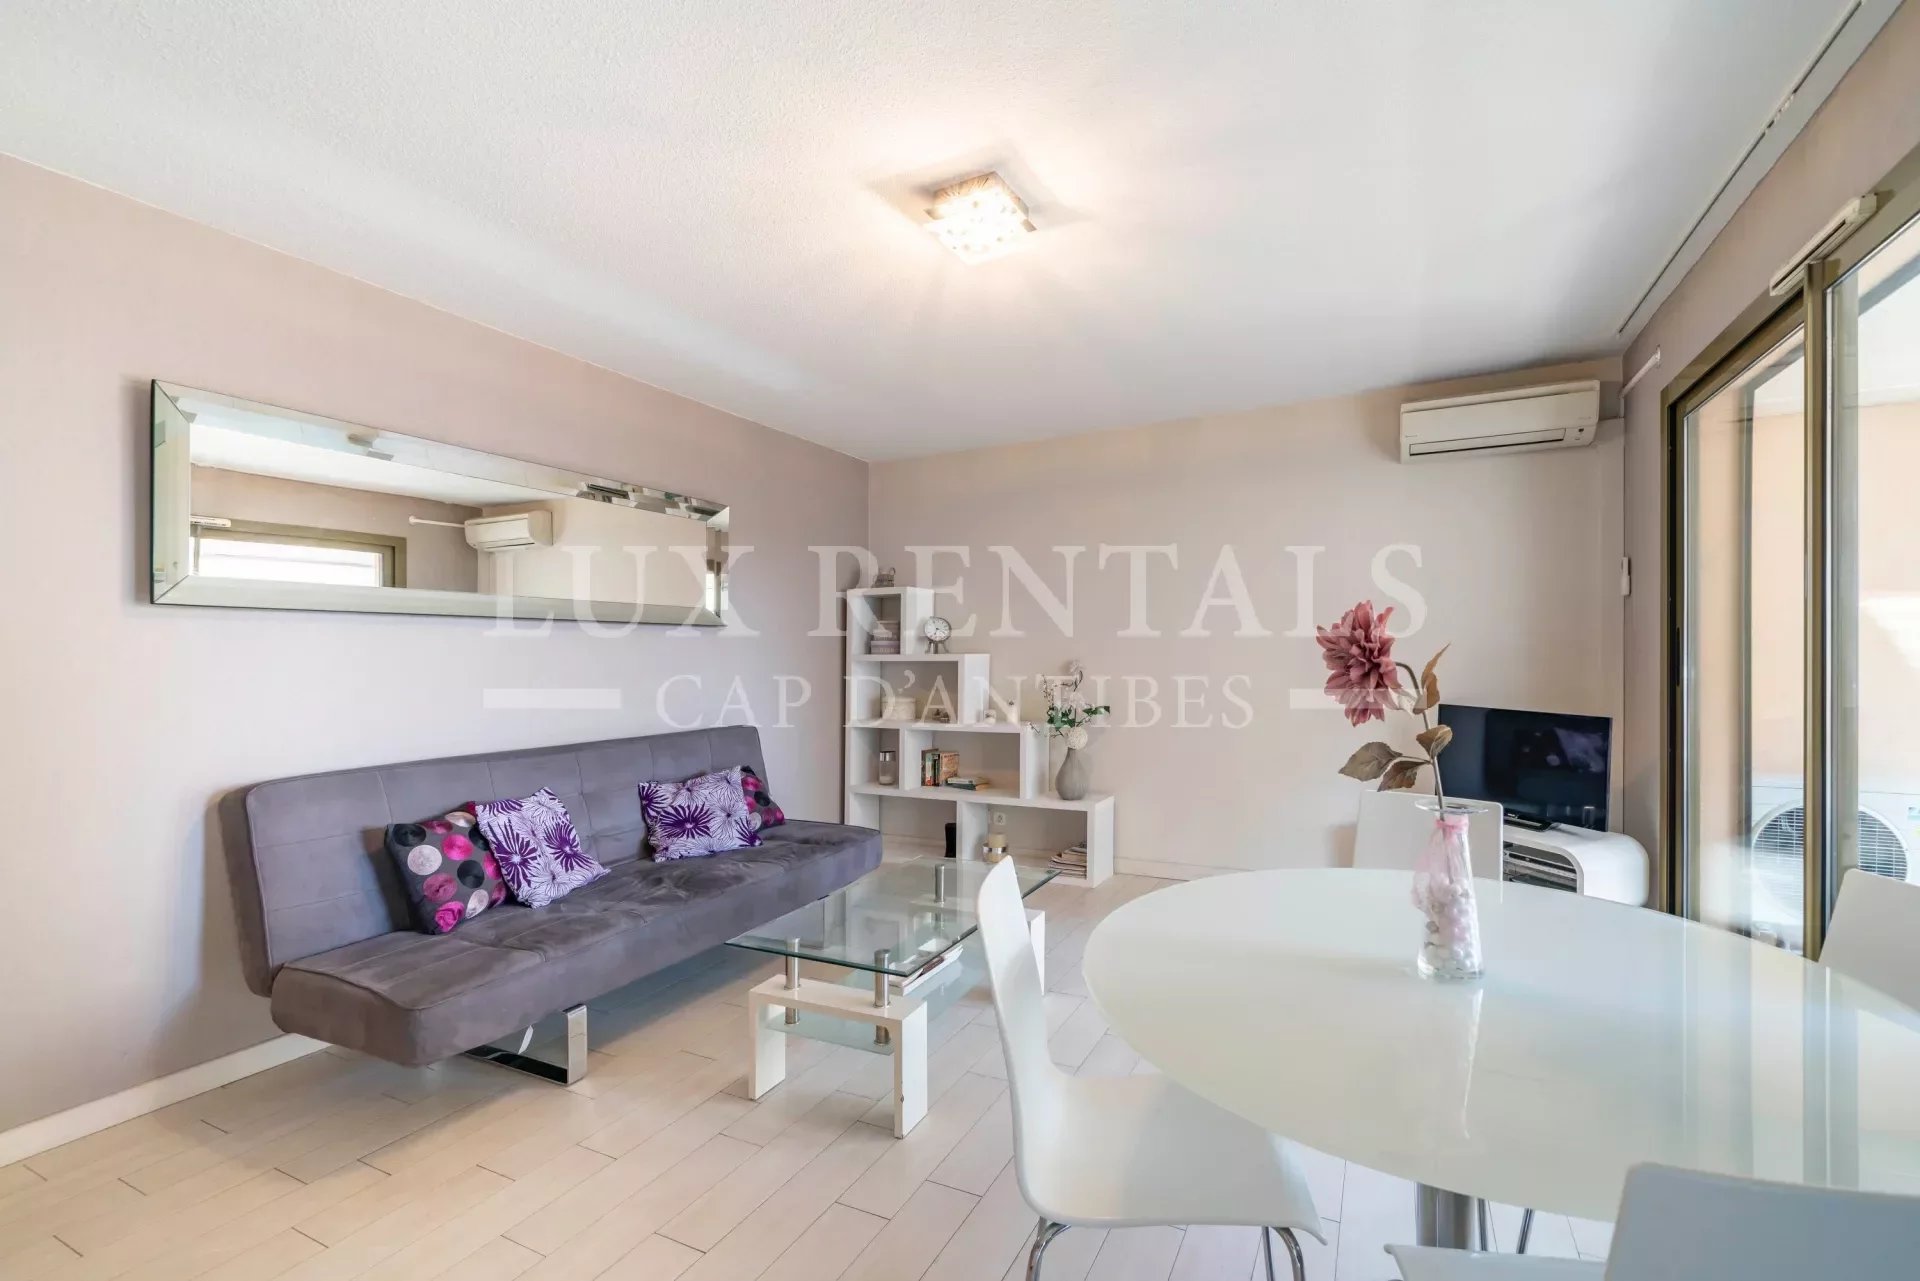 Rental Apartment - Antibes Vieil Antibes